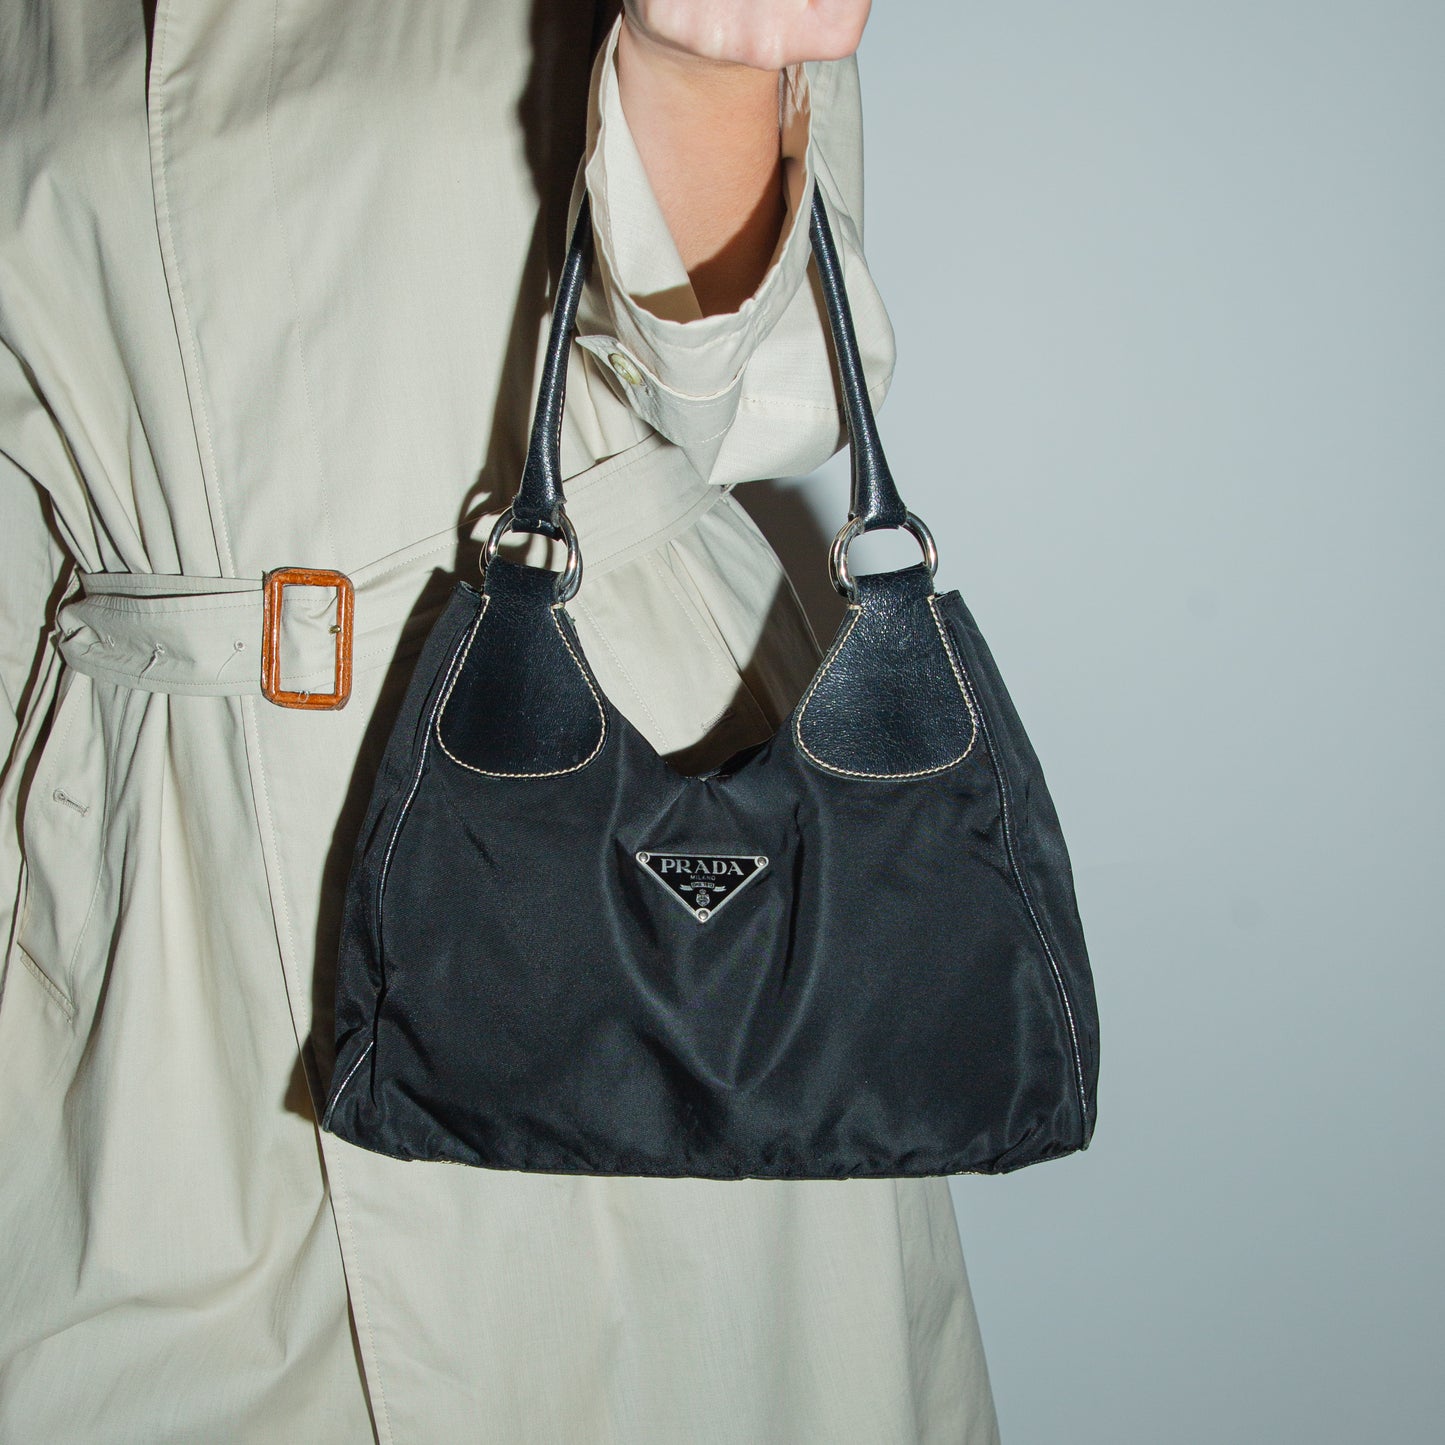 Vintage Prada Black White Stitching Shoulder Bag